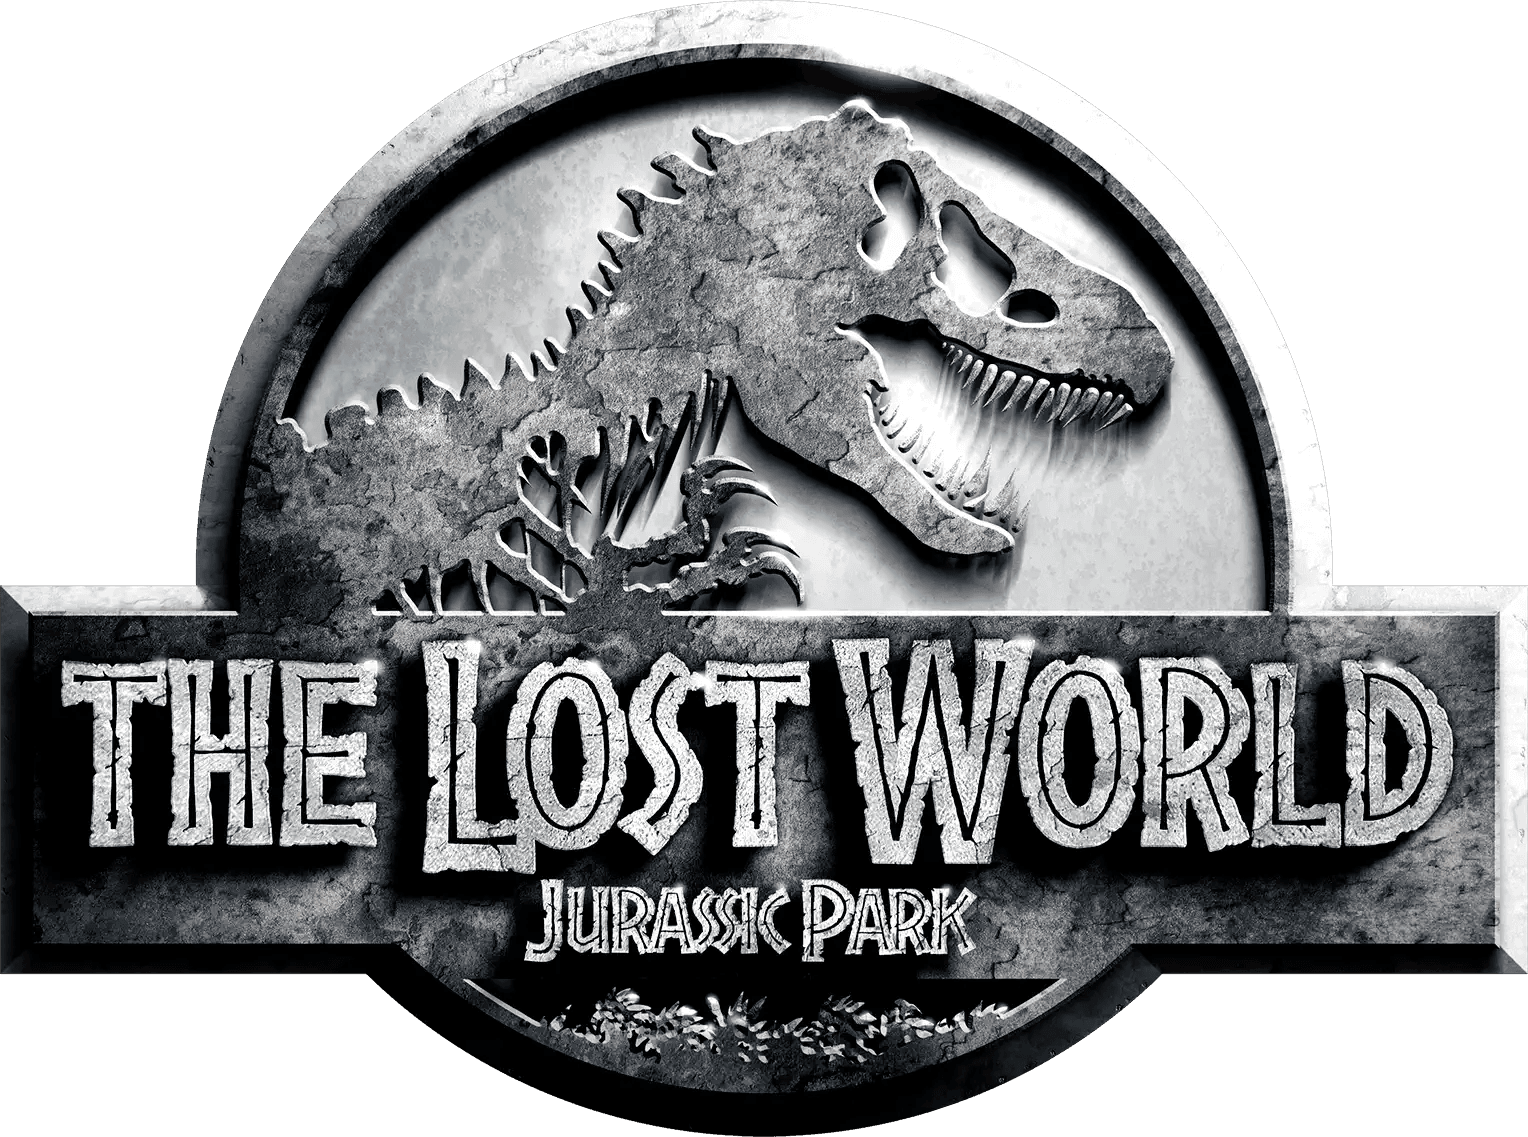 The Lost World: Jurassic Park logo